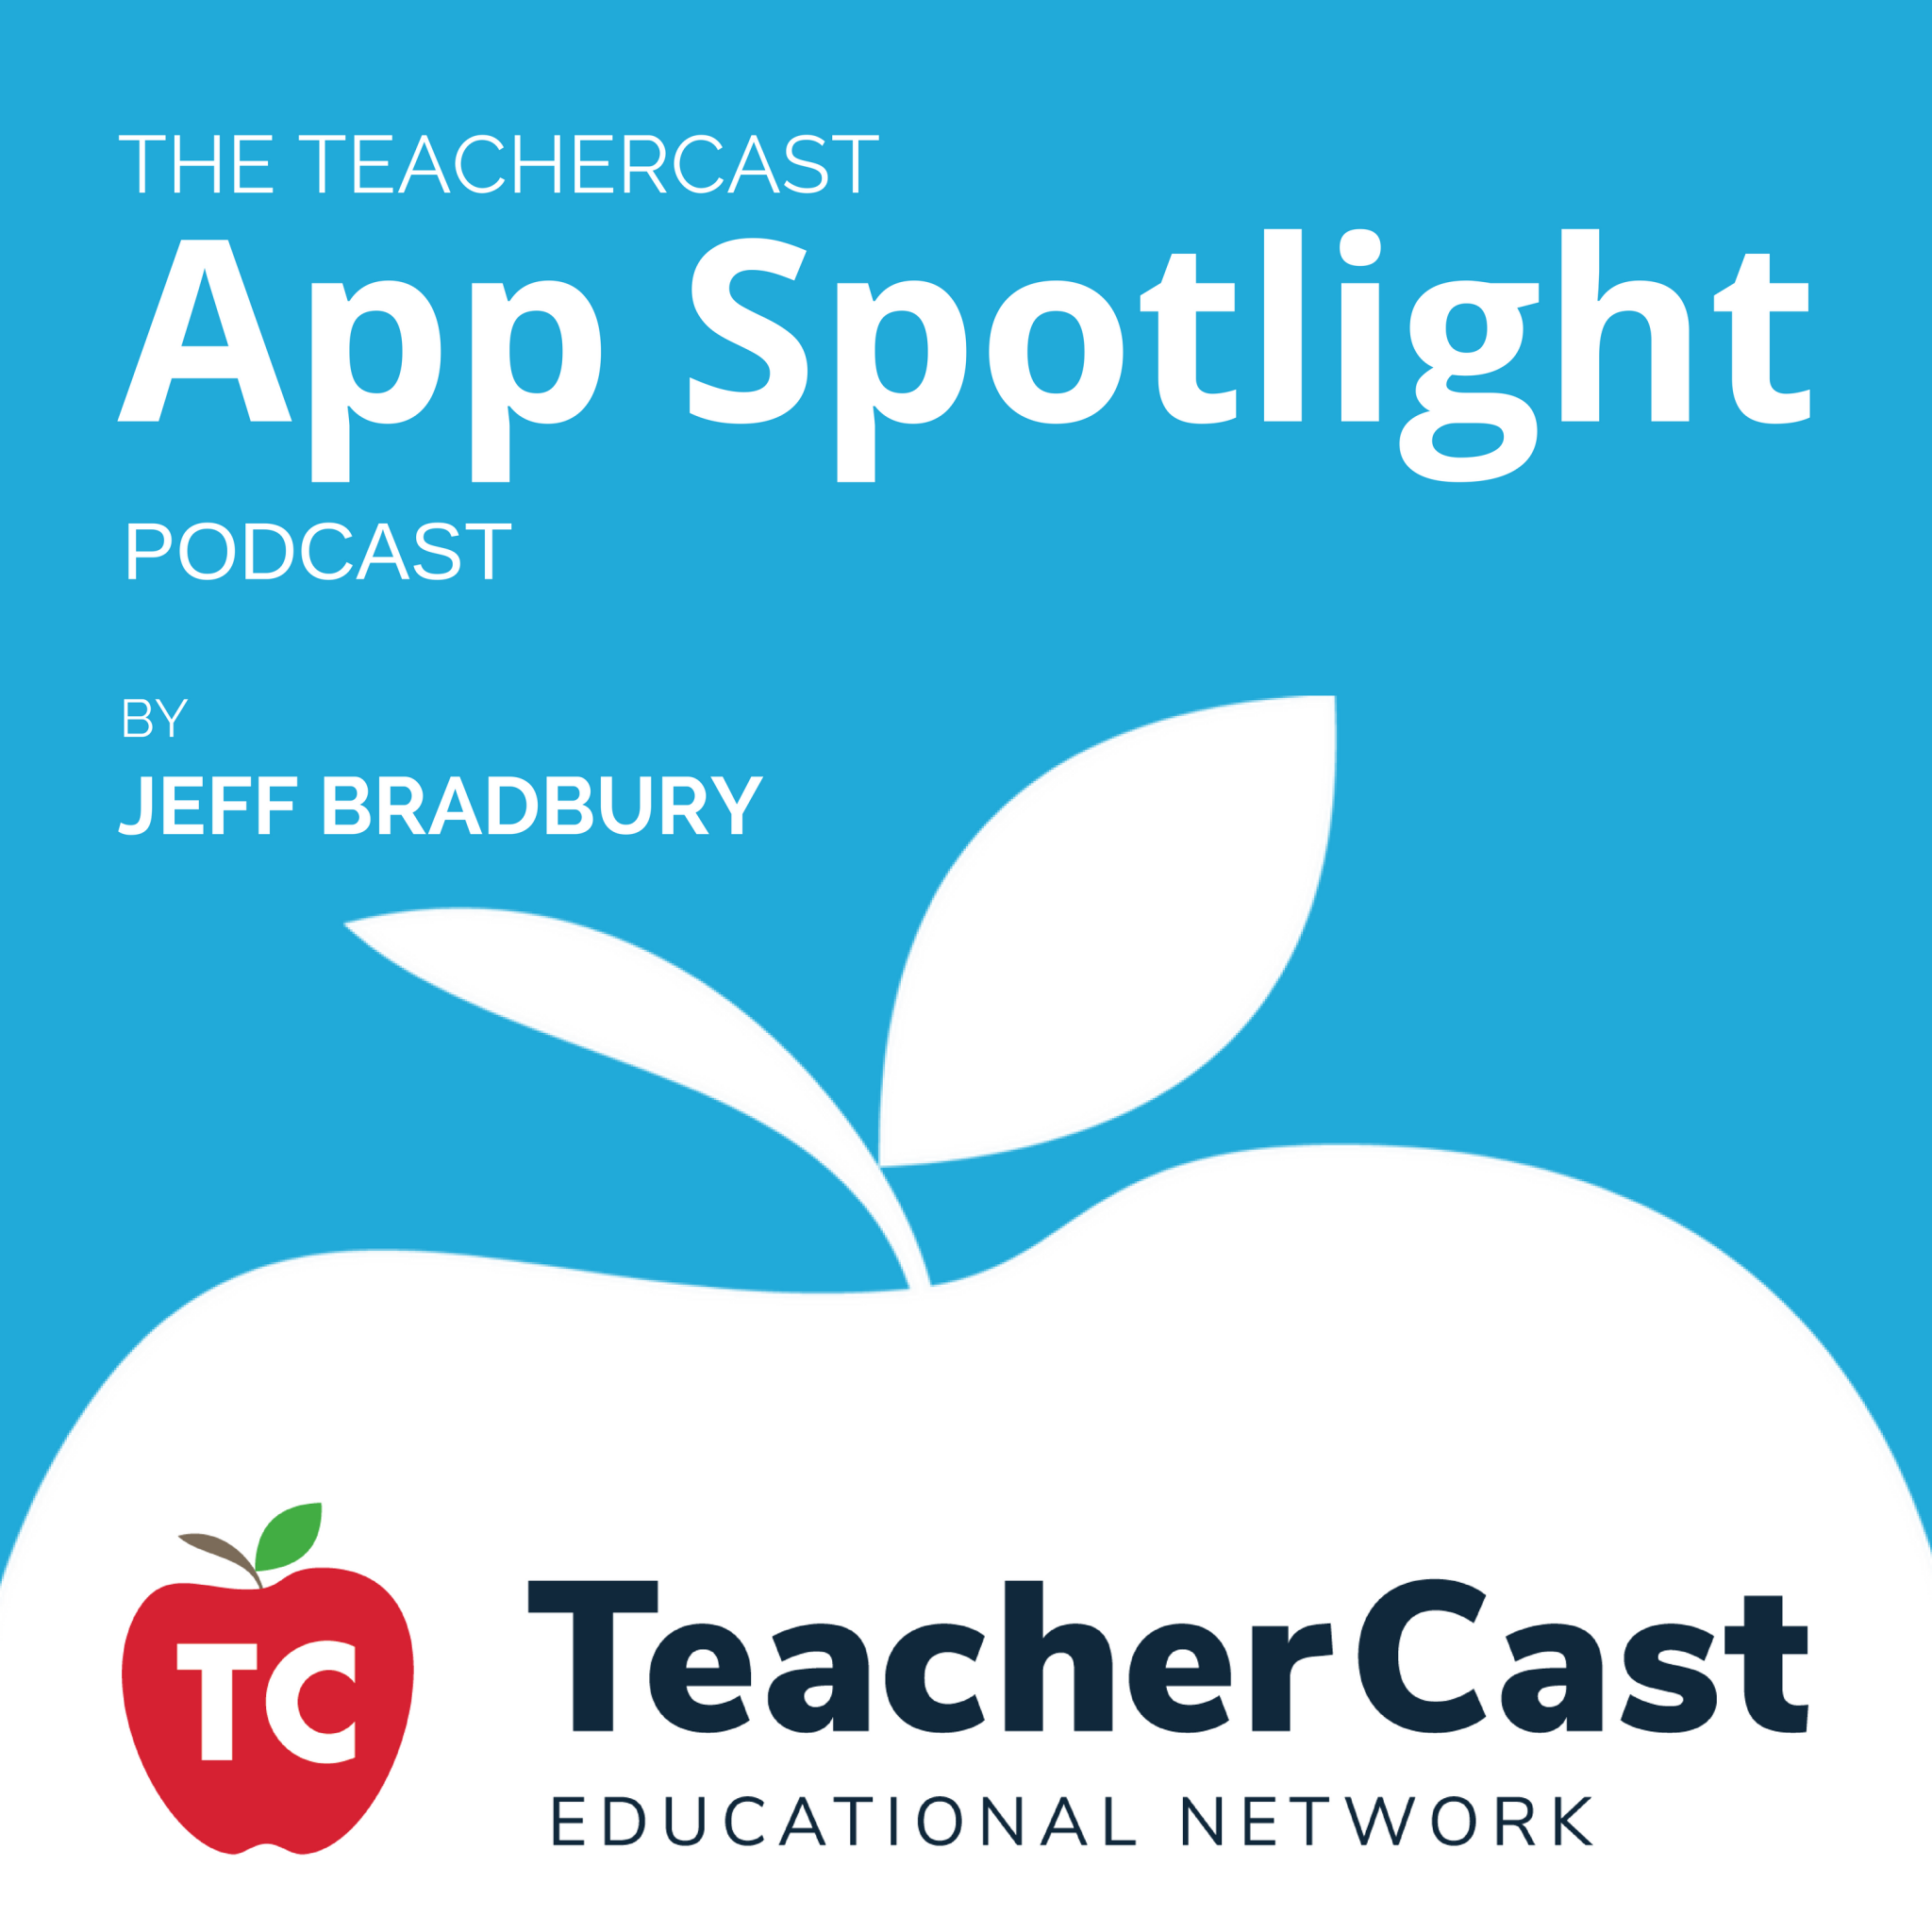 The TeacherCast App Spotlight